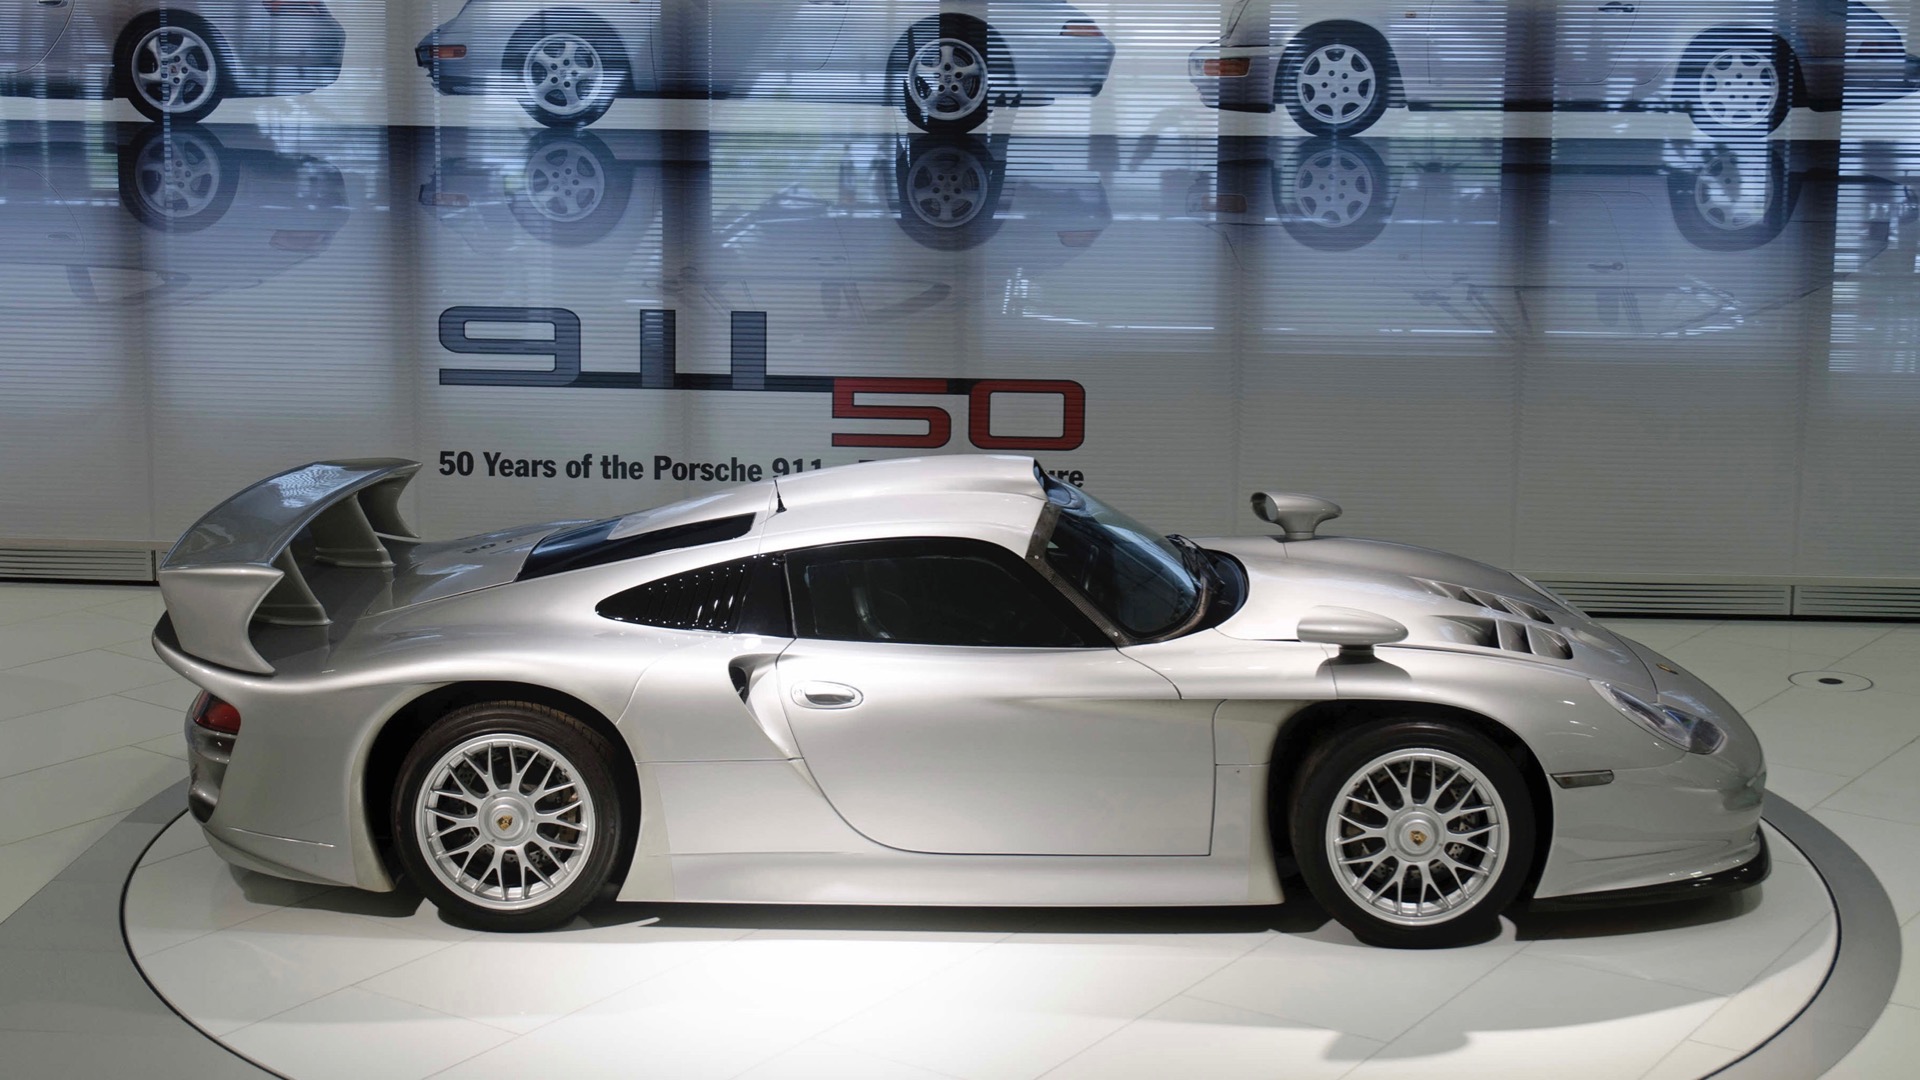 Porsche 911 GT1 Straßenversion owner’s guide video details the rare hypercar Auto Recent